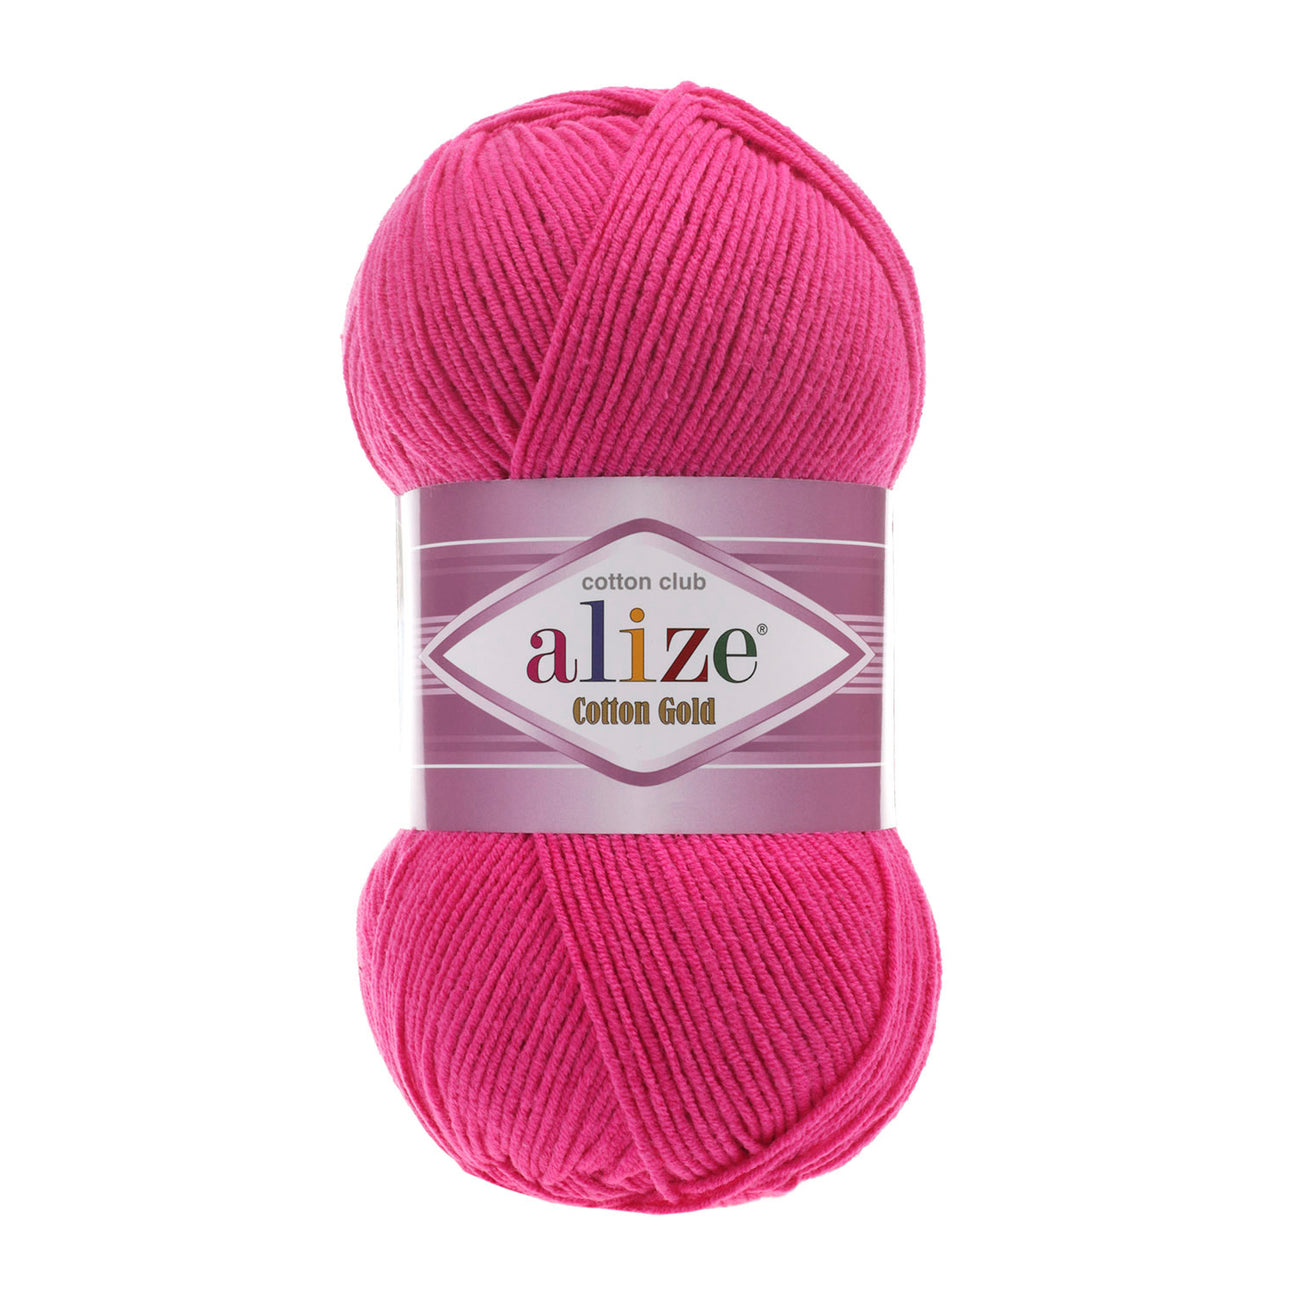  4 Balls Alize Cotton Gold, Crochet Yarn, Knitting Yarn